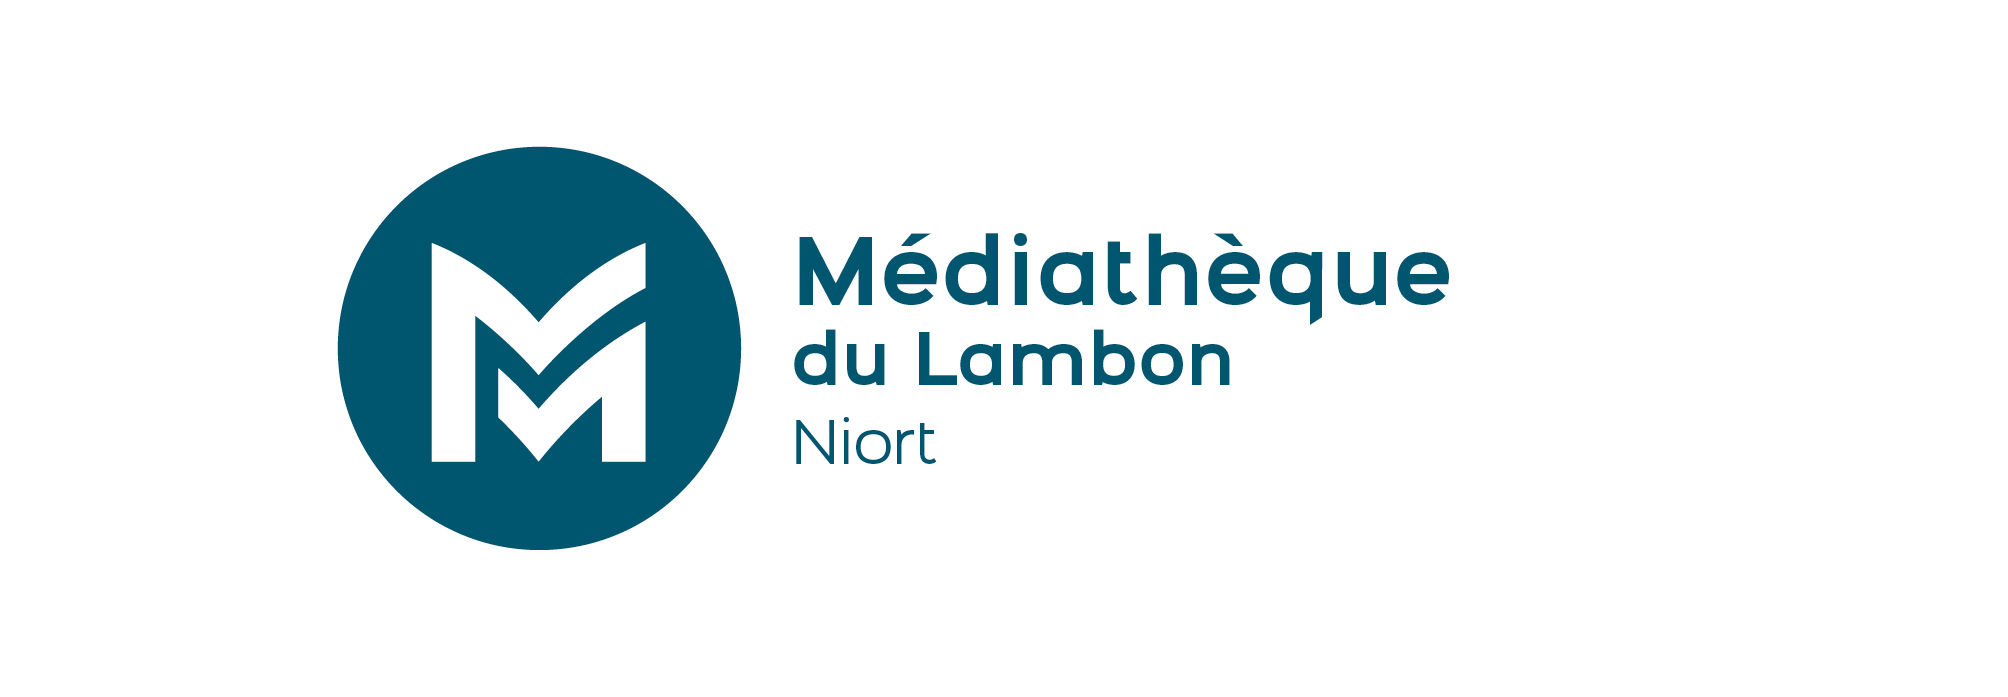 Médiathèque Lambon Niort